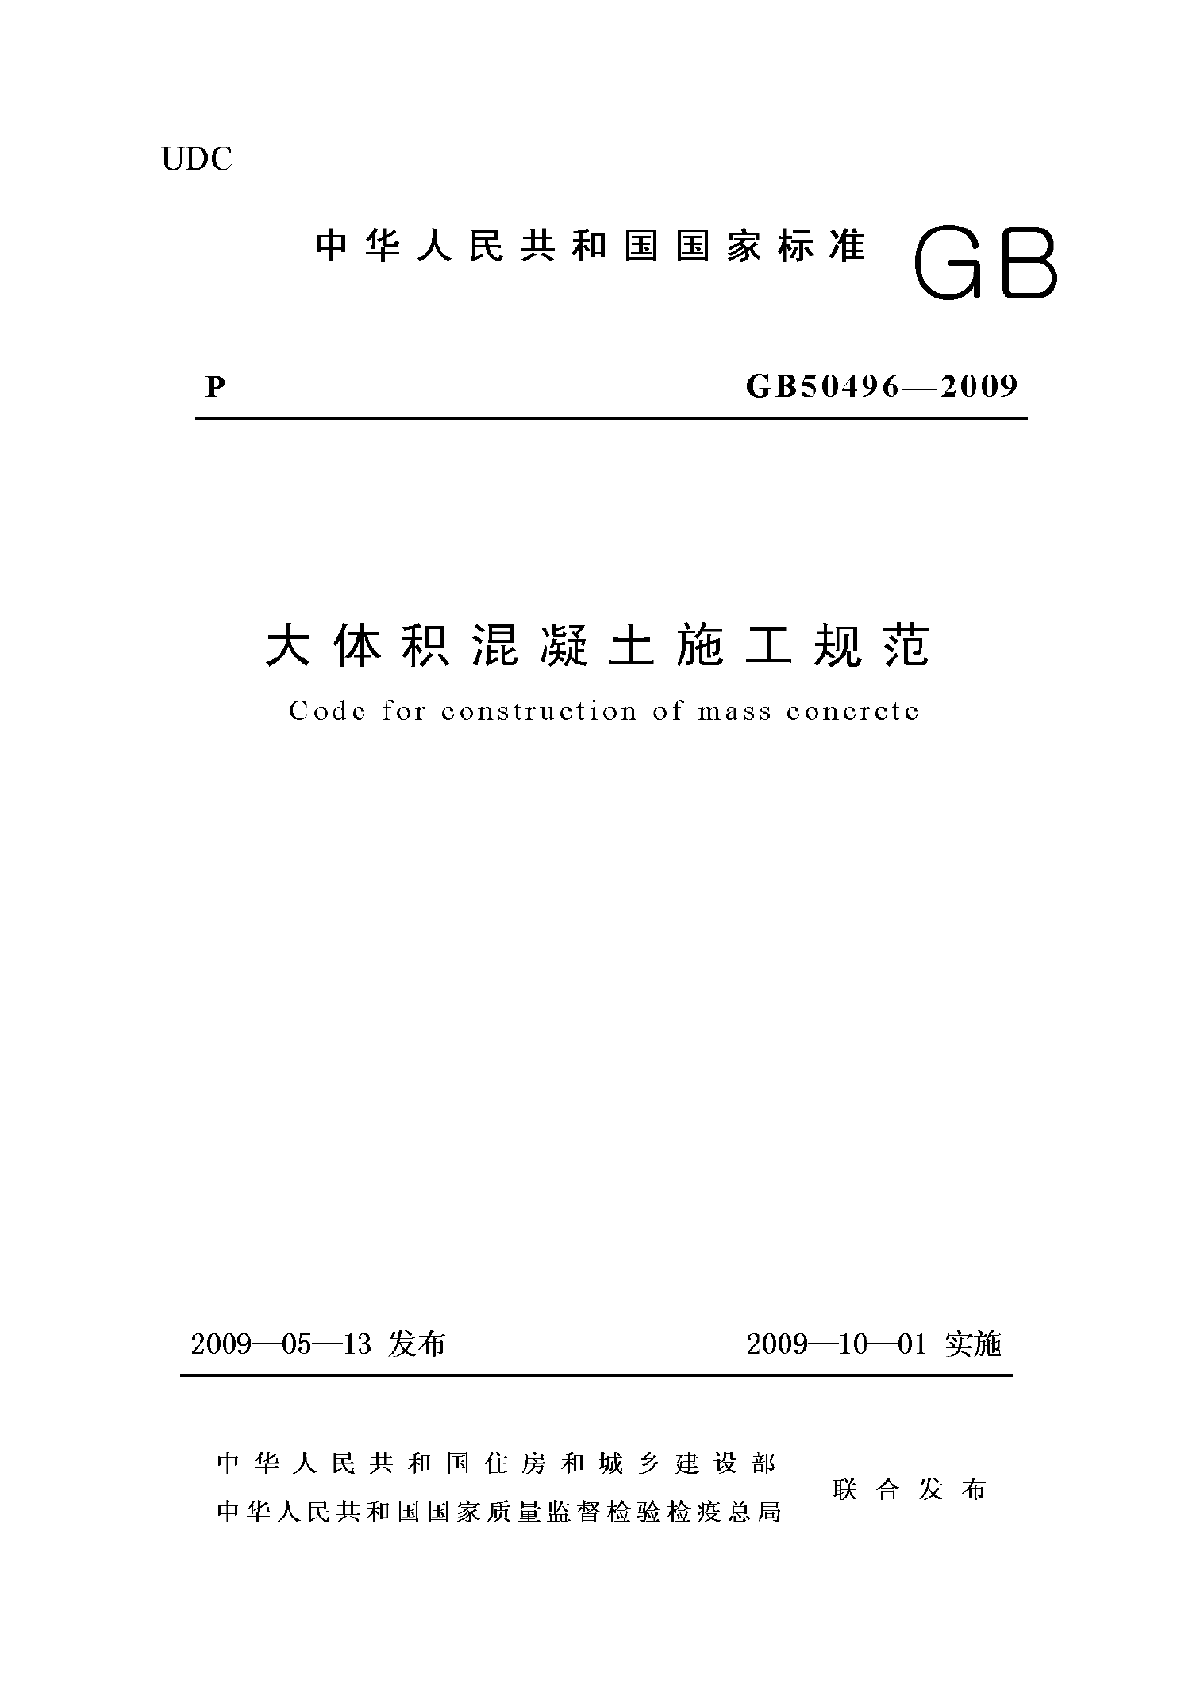 GB50496-2009大体积混凝土施工规范.pdf